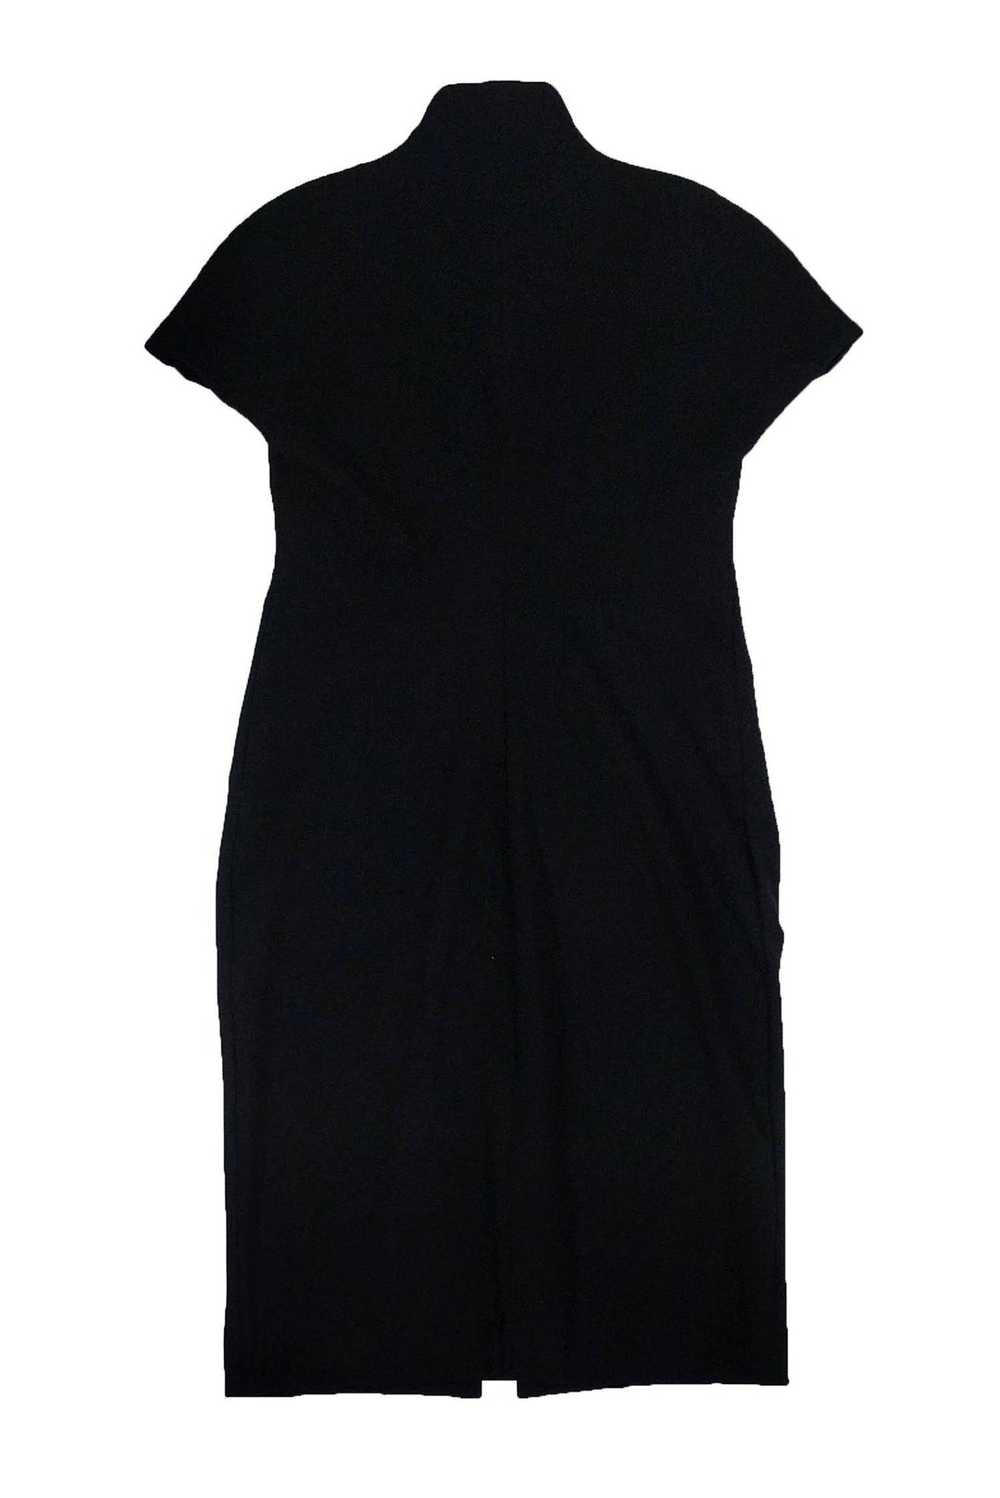 Catherine Malandrino - Black Zip Dress Sz P - image 2